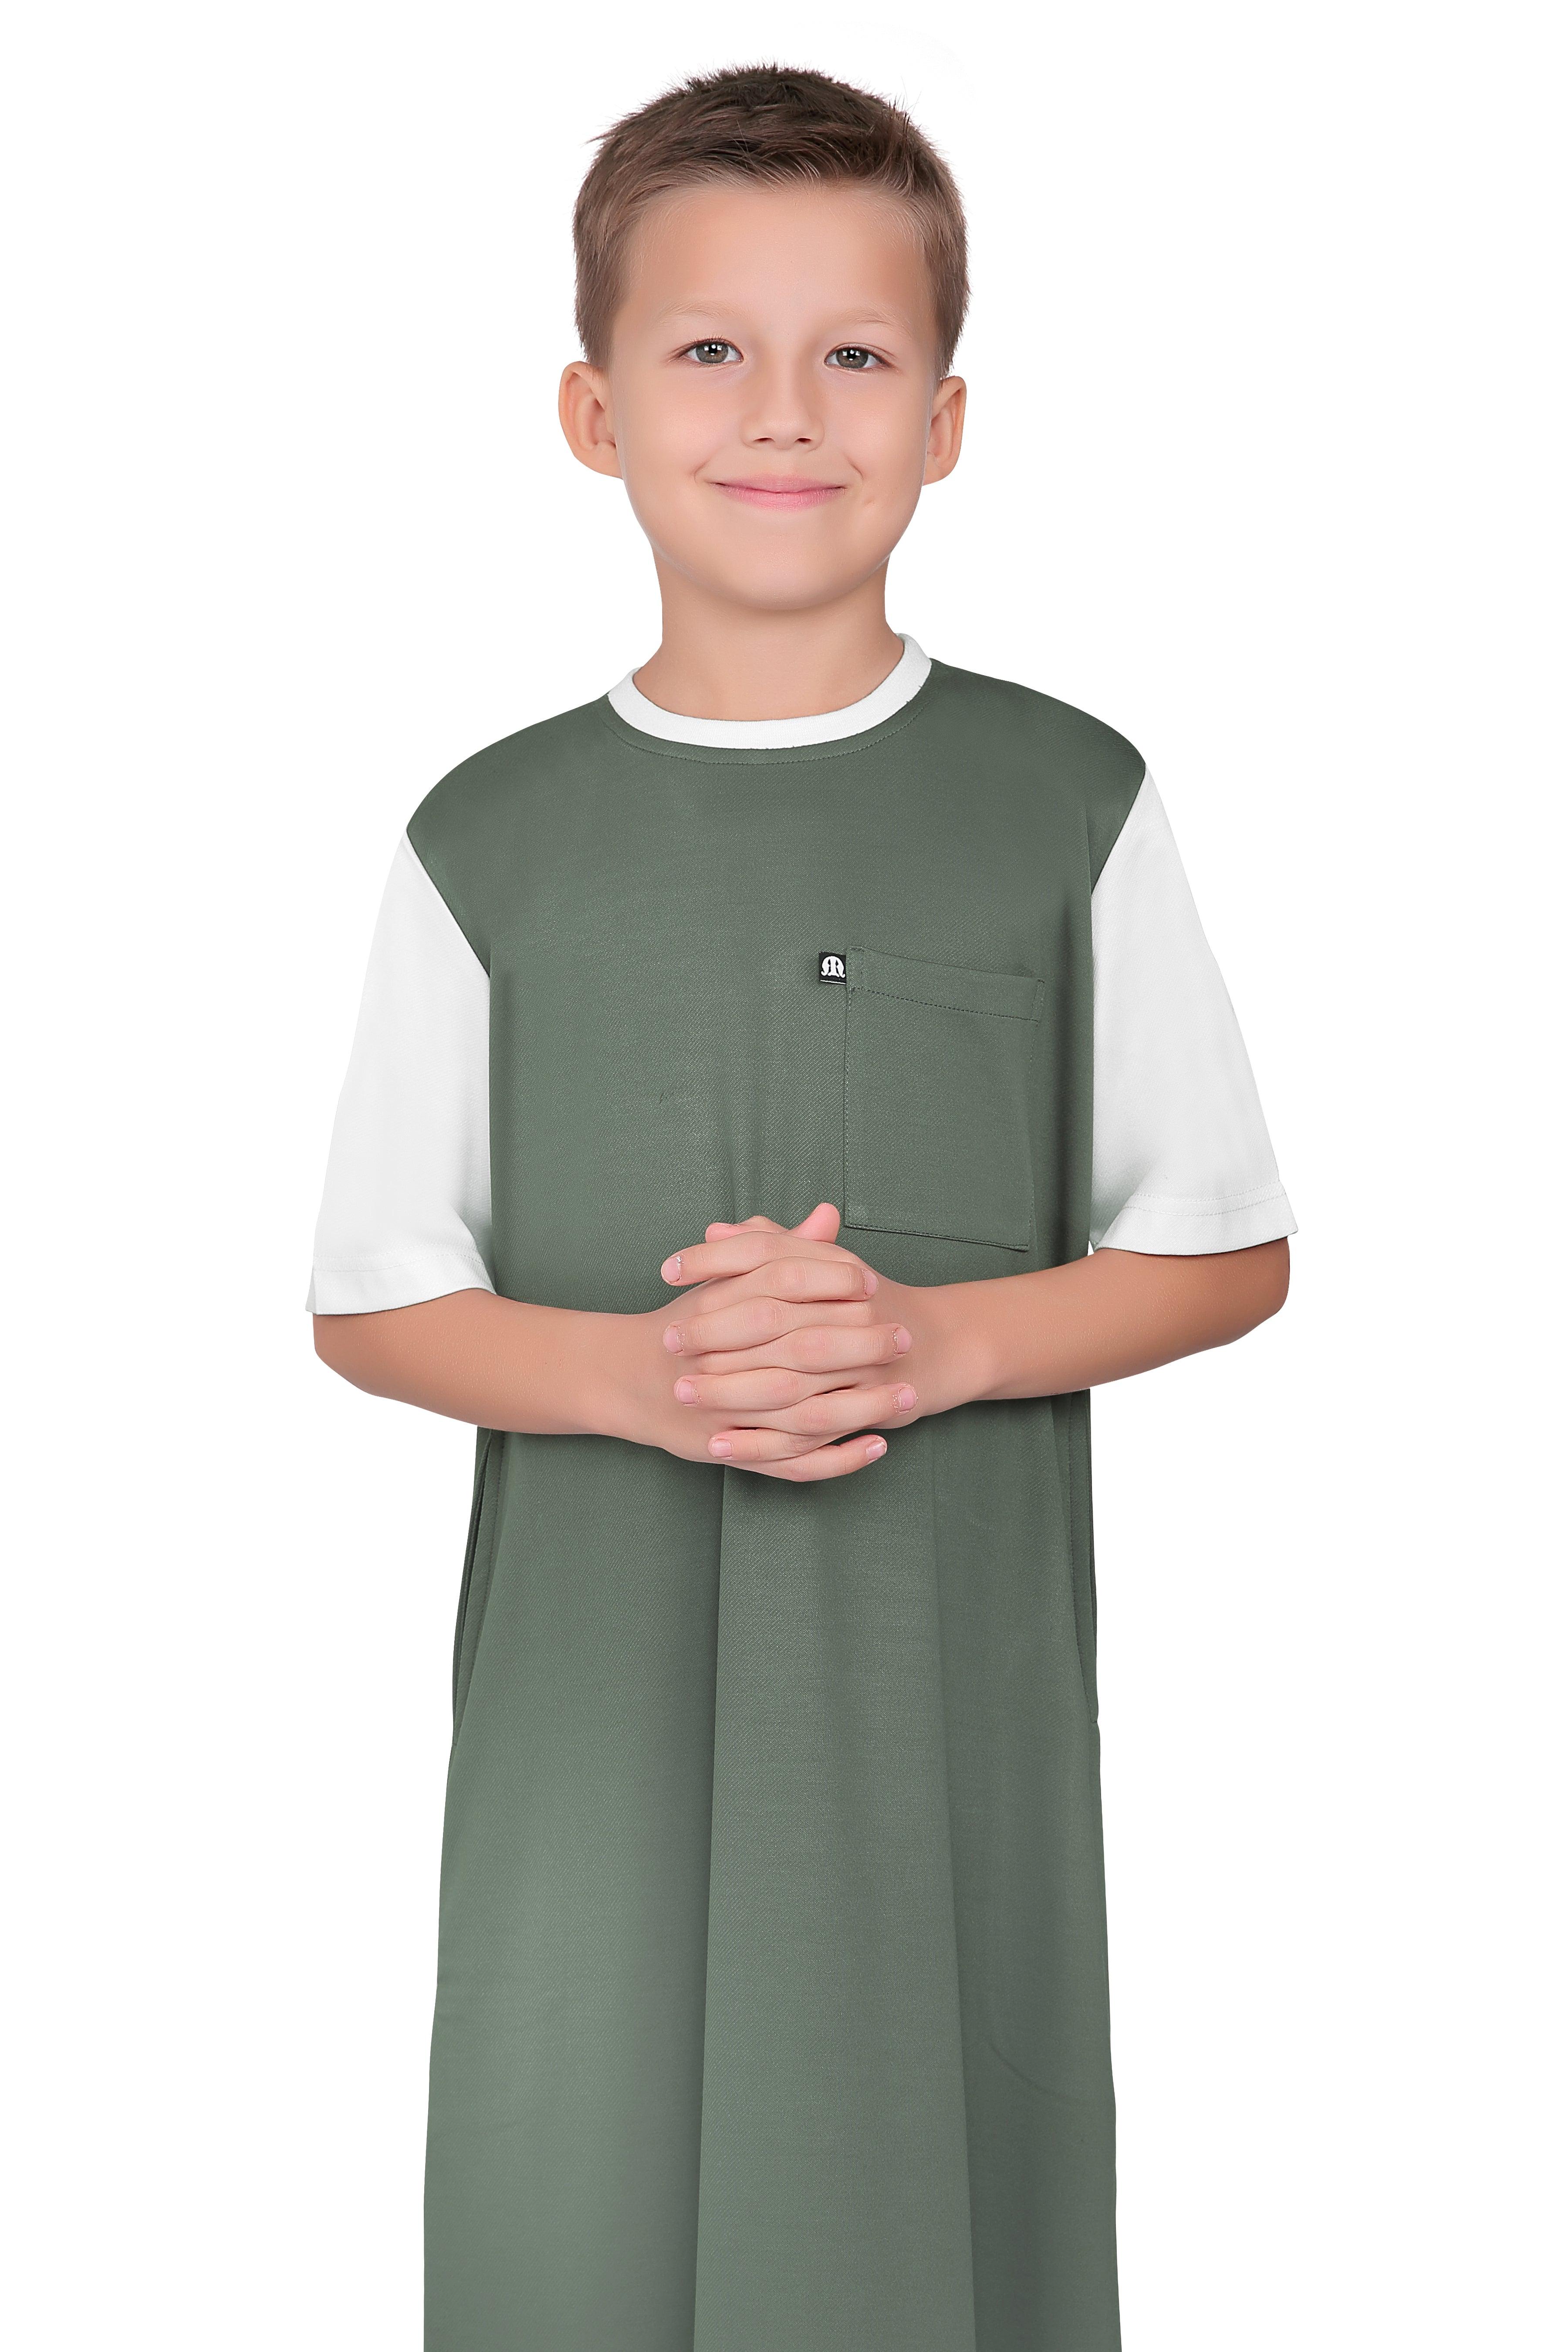 Mullido Green Over size Thobe for Kids - Mashroo